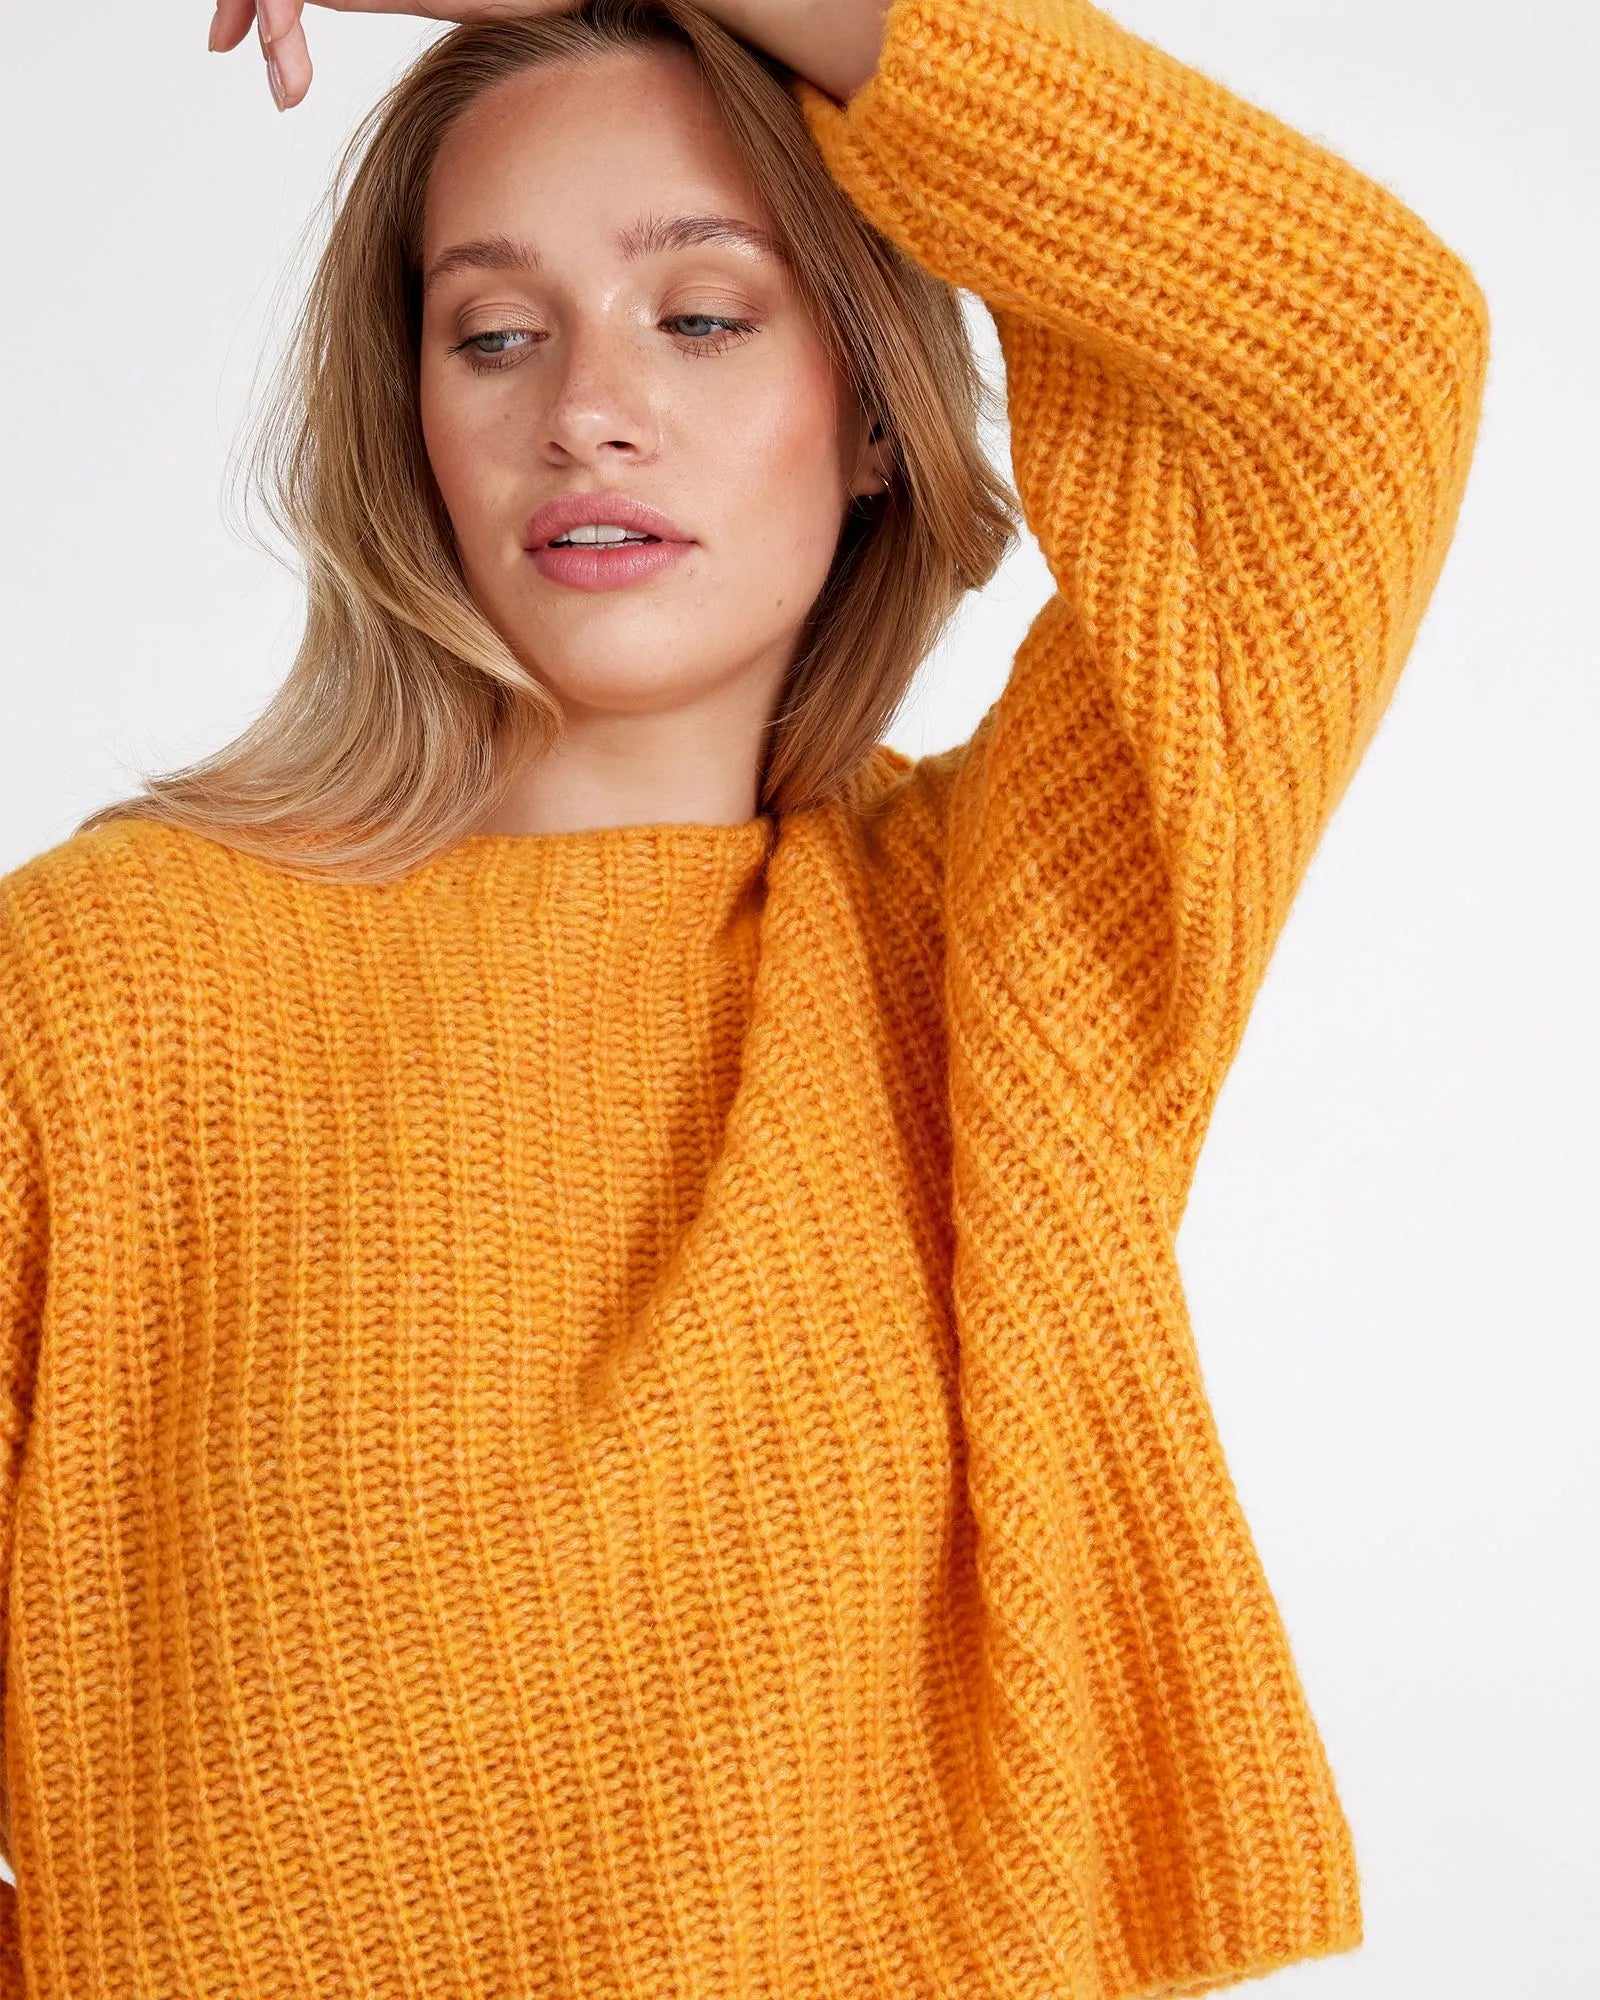 Cajsa Super Soft Knitted Sweater - Bright Marigold